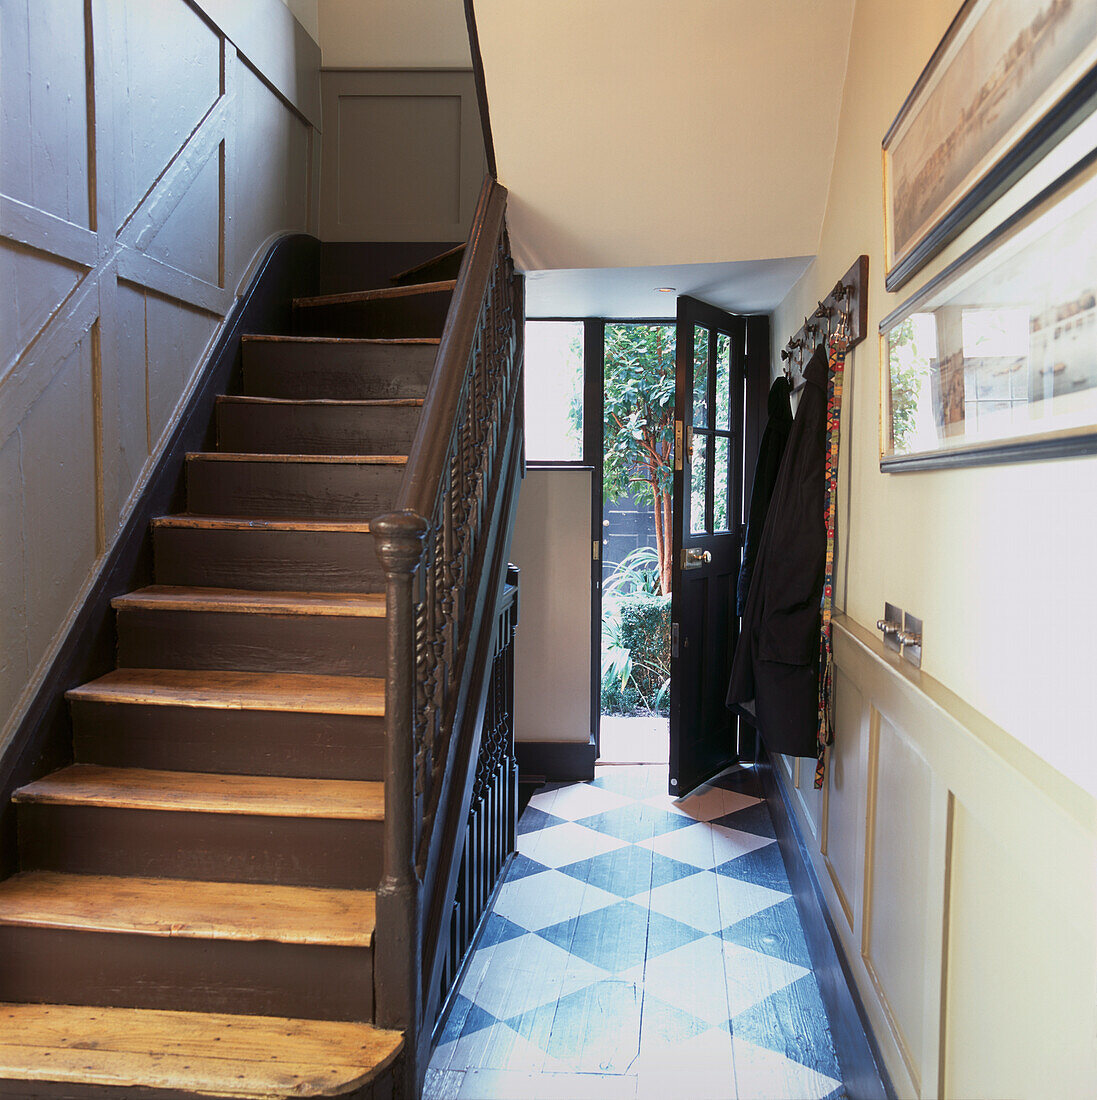 Restored stairwell in panelled corridor with stencilled floor